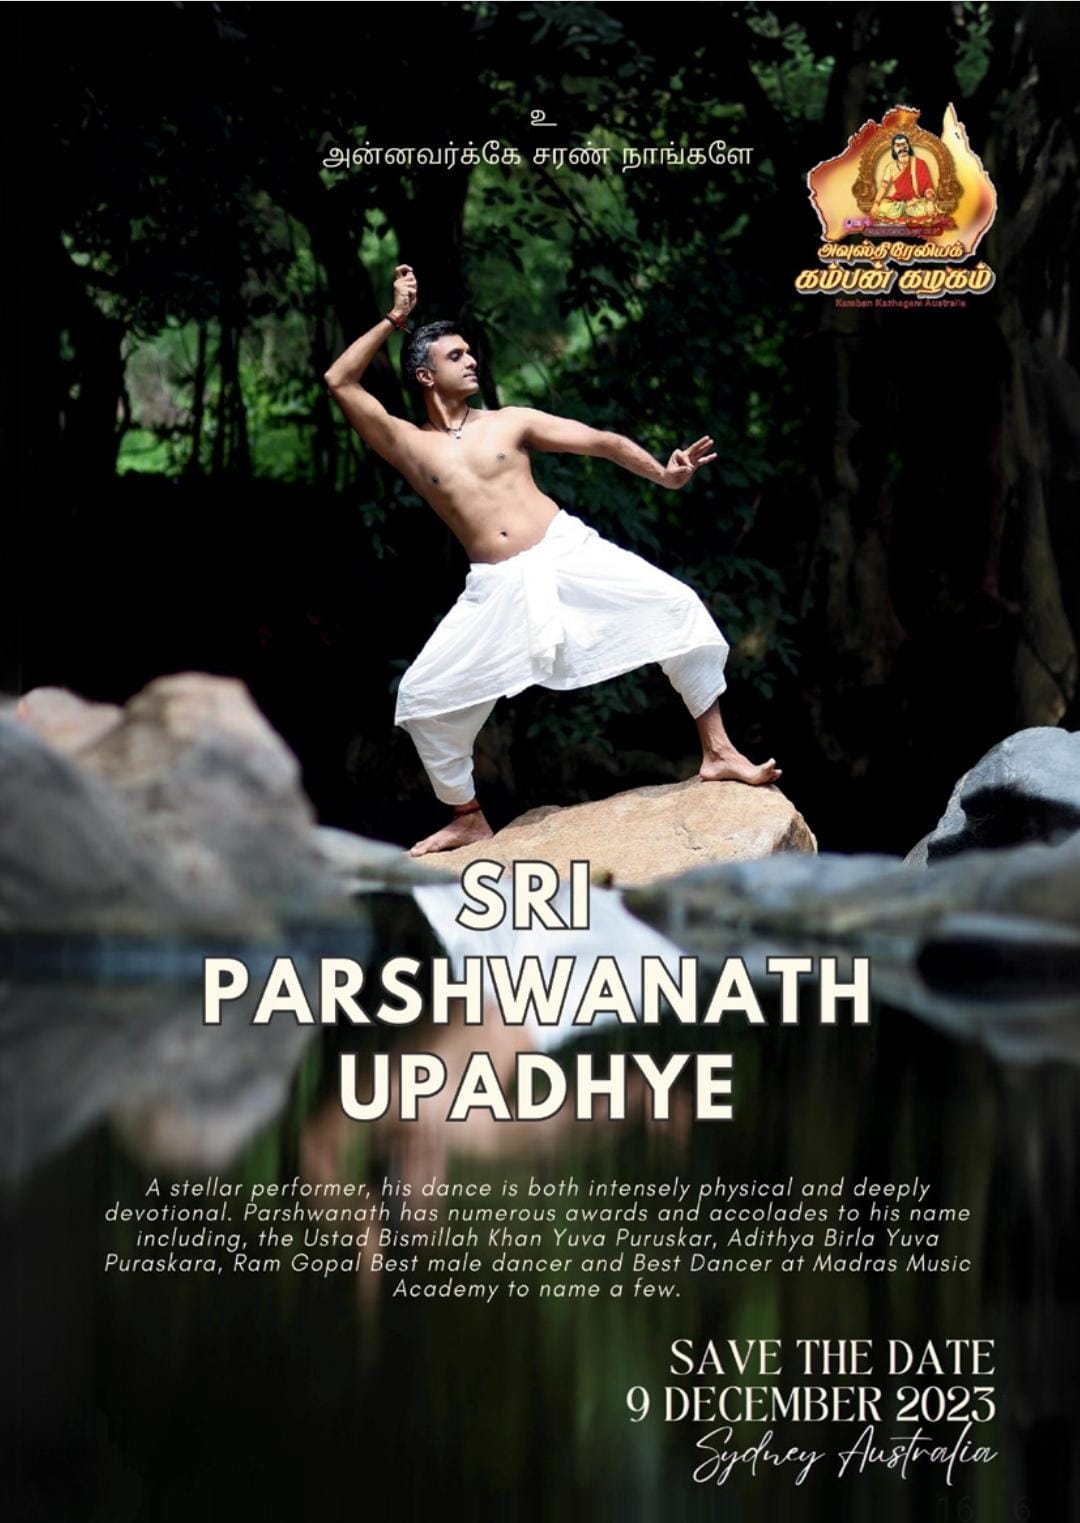 Parshwanath Upadhye